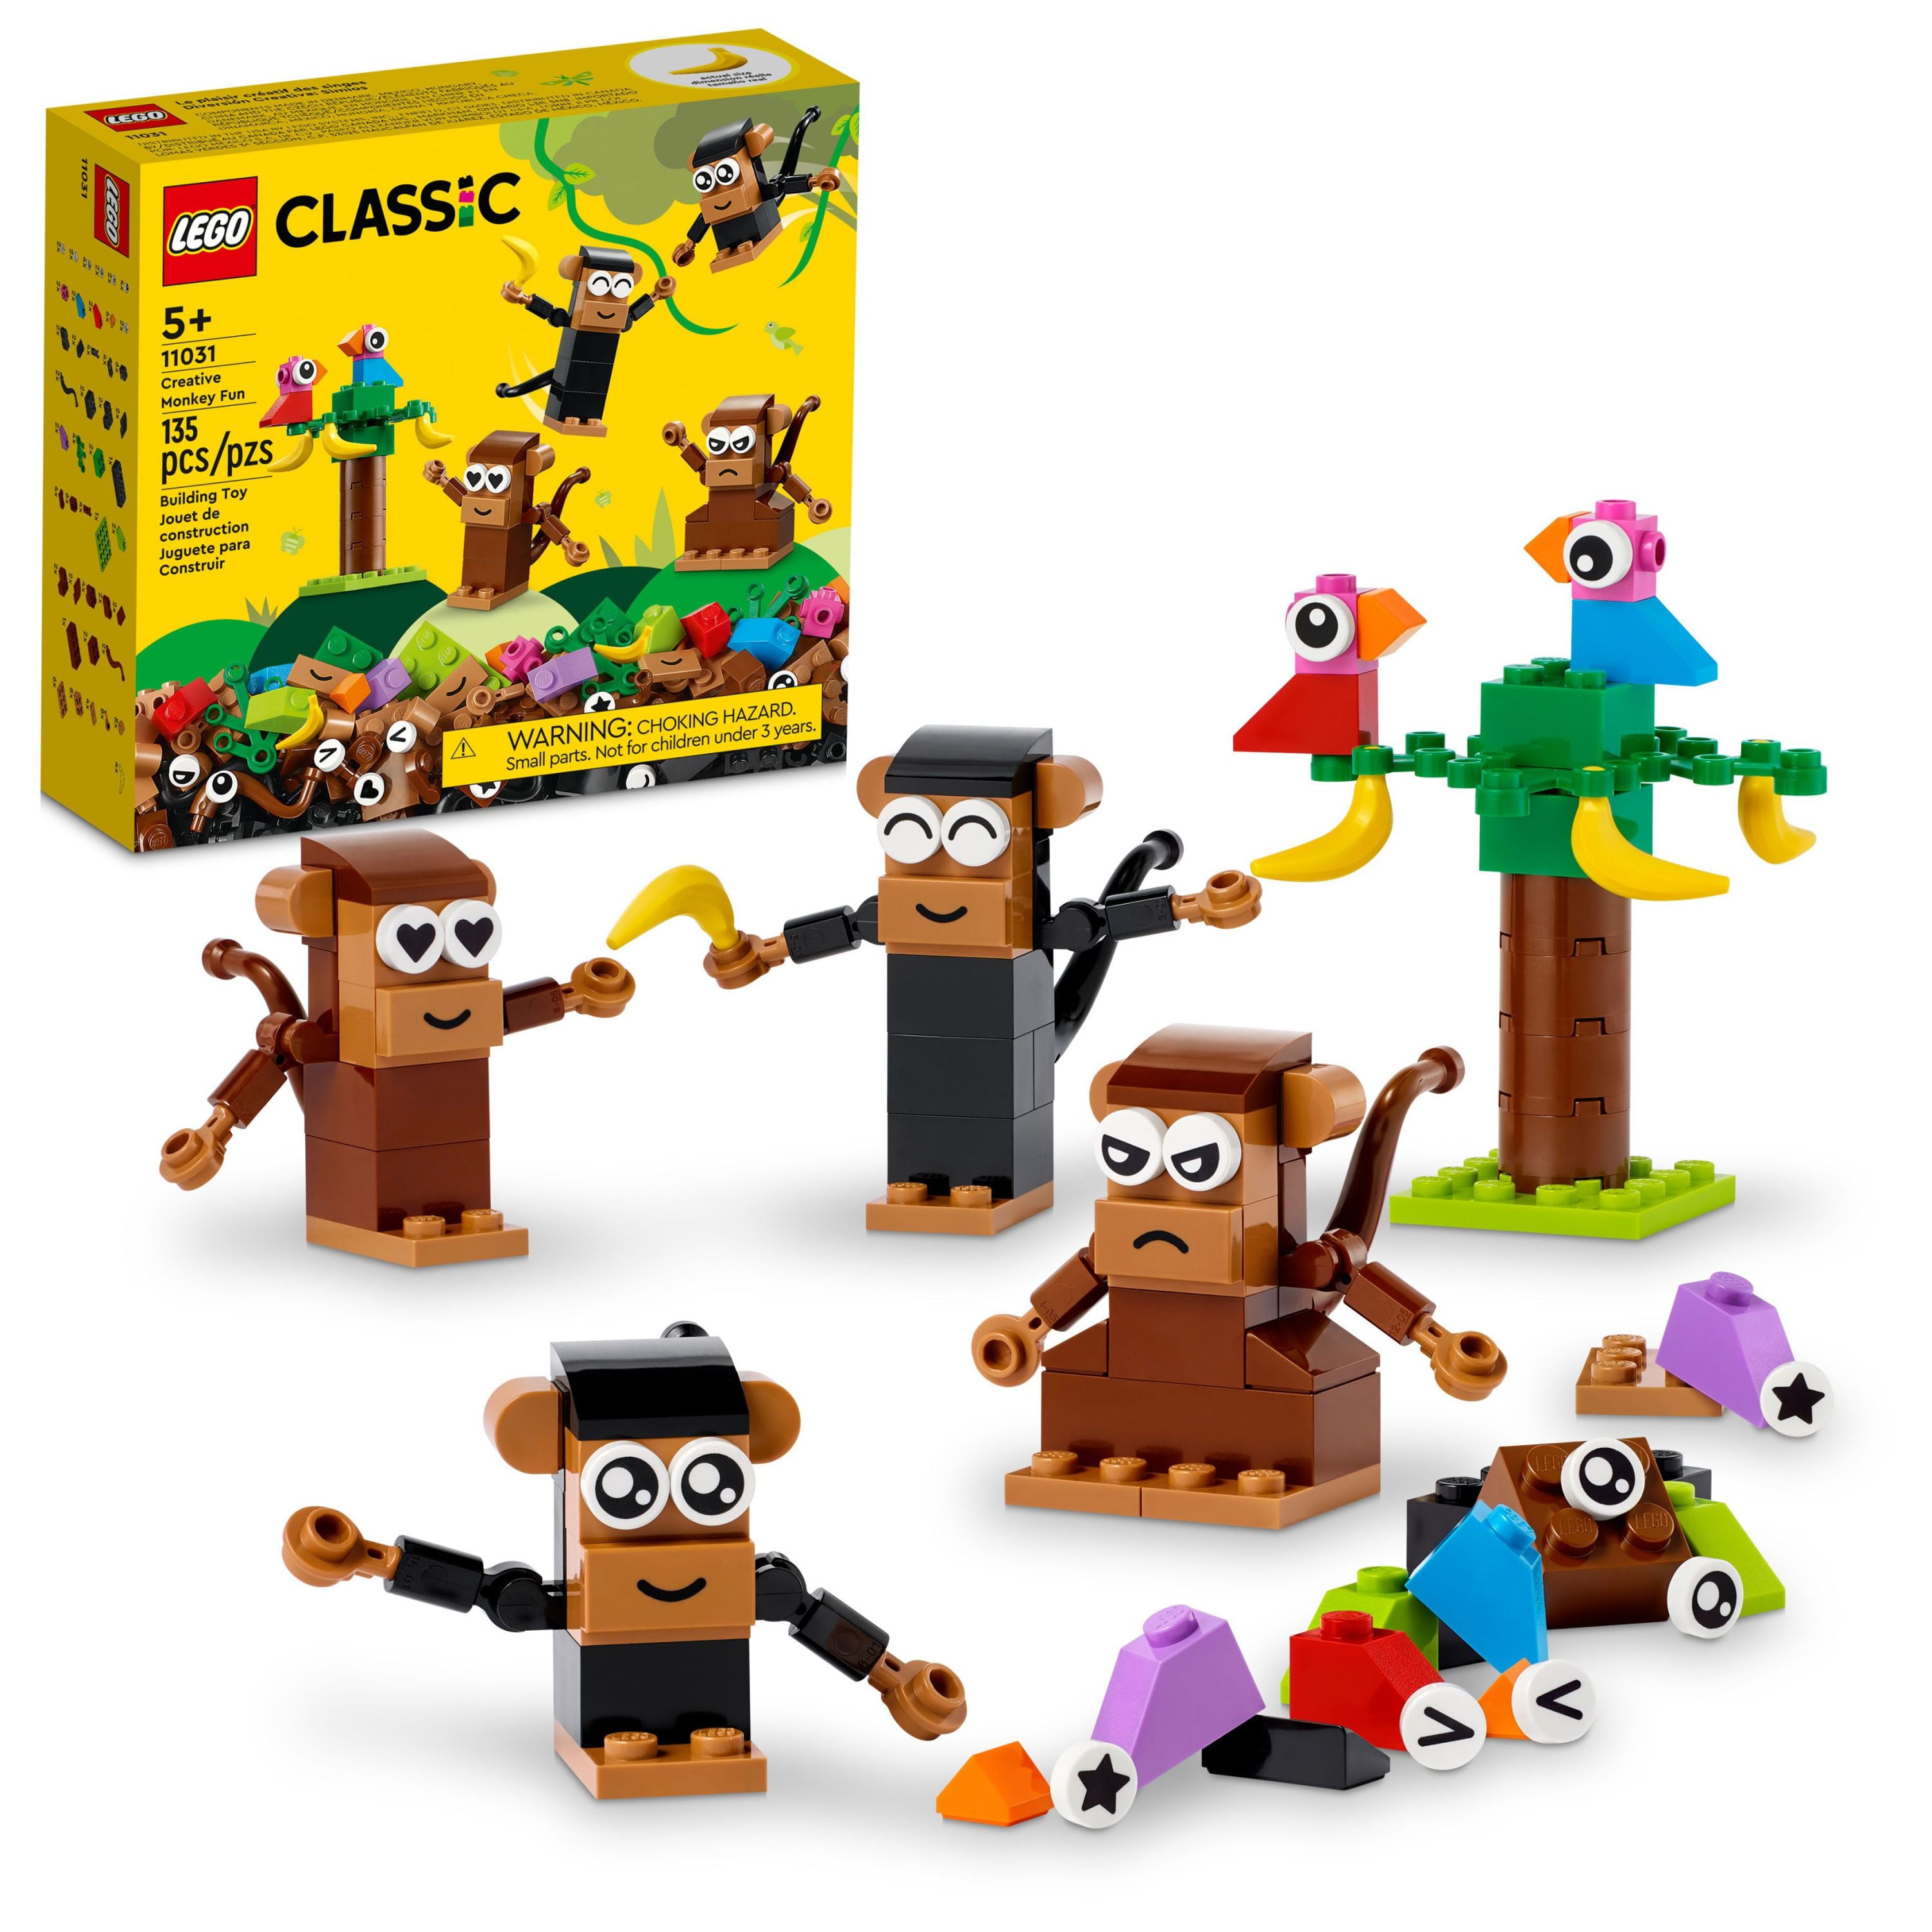 LEGO Classic Creative Monkey Fun 11031 Building Toy Set (135 Pieces) $15.00